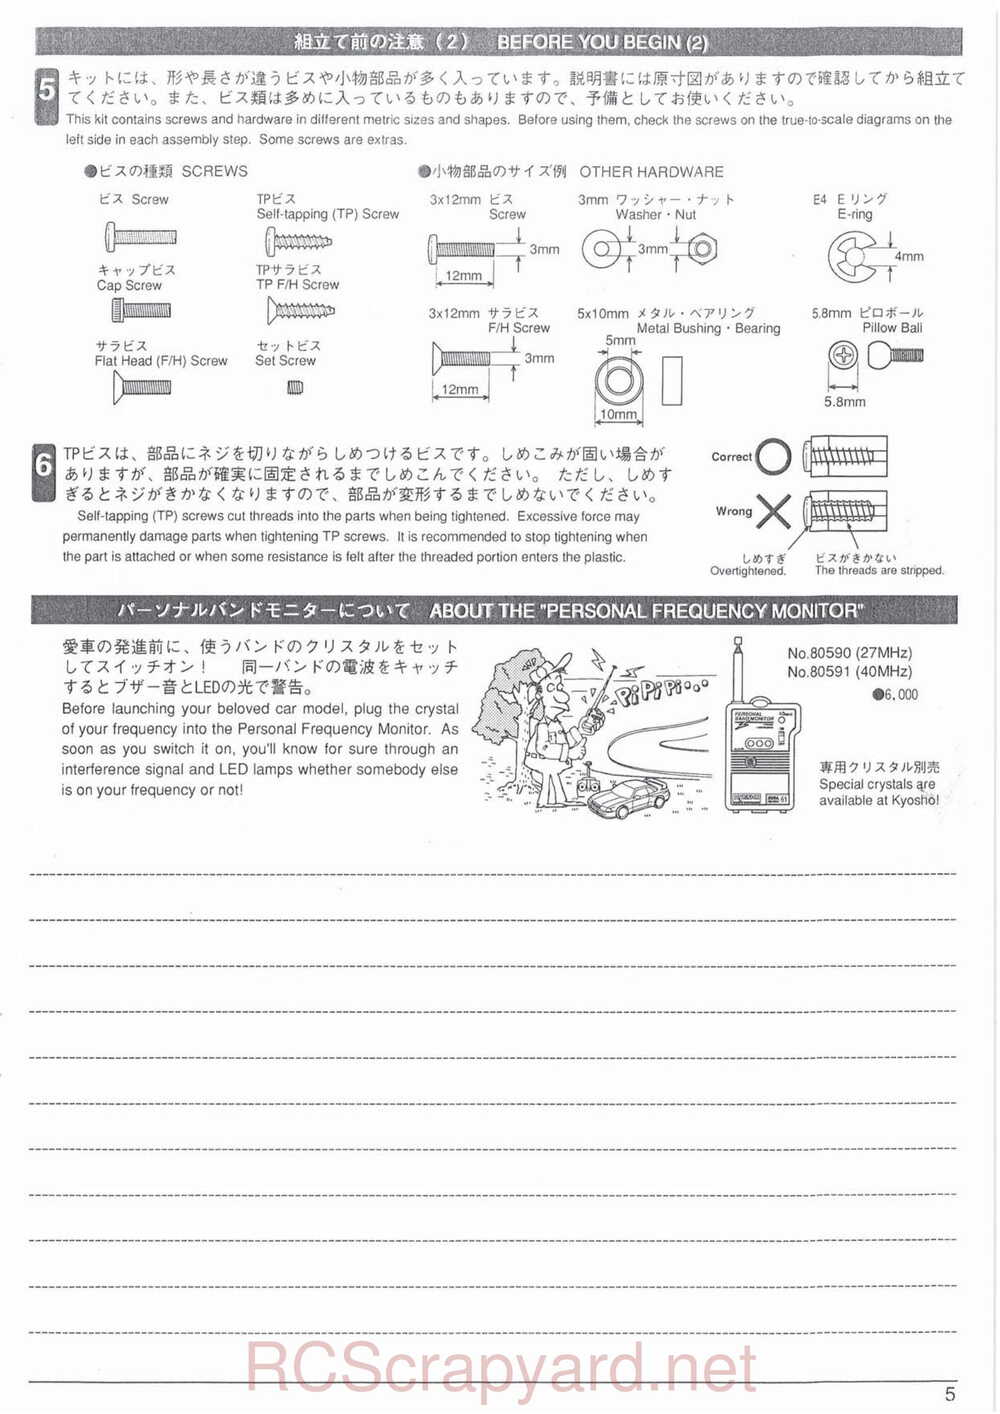 Kyosho - 31701 - Superten-Four FW-03 - Manual - Page 05